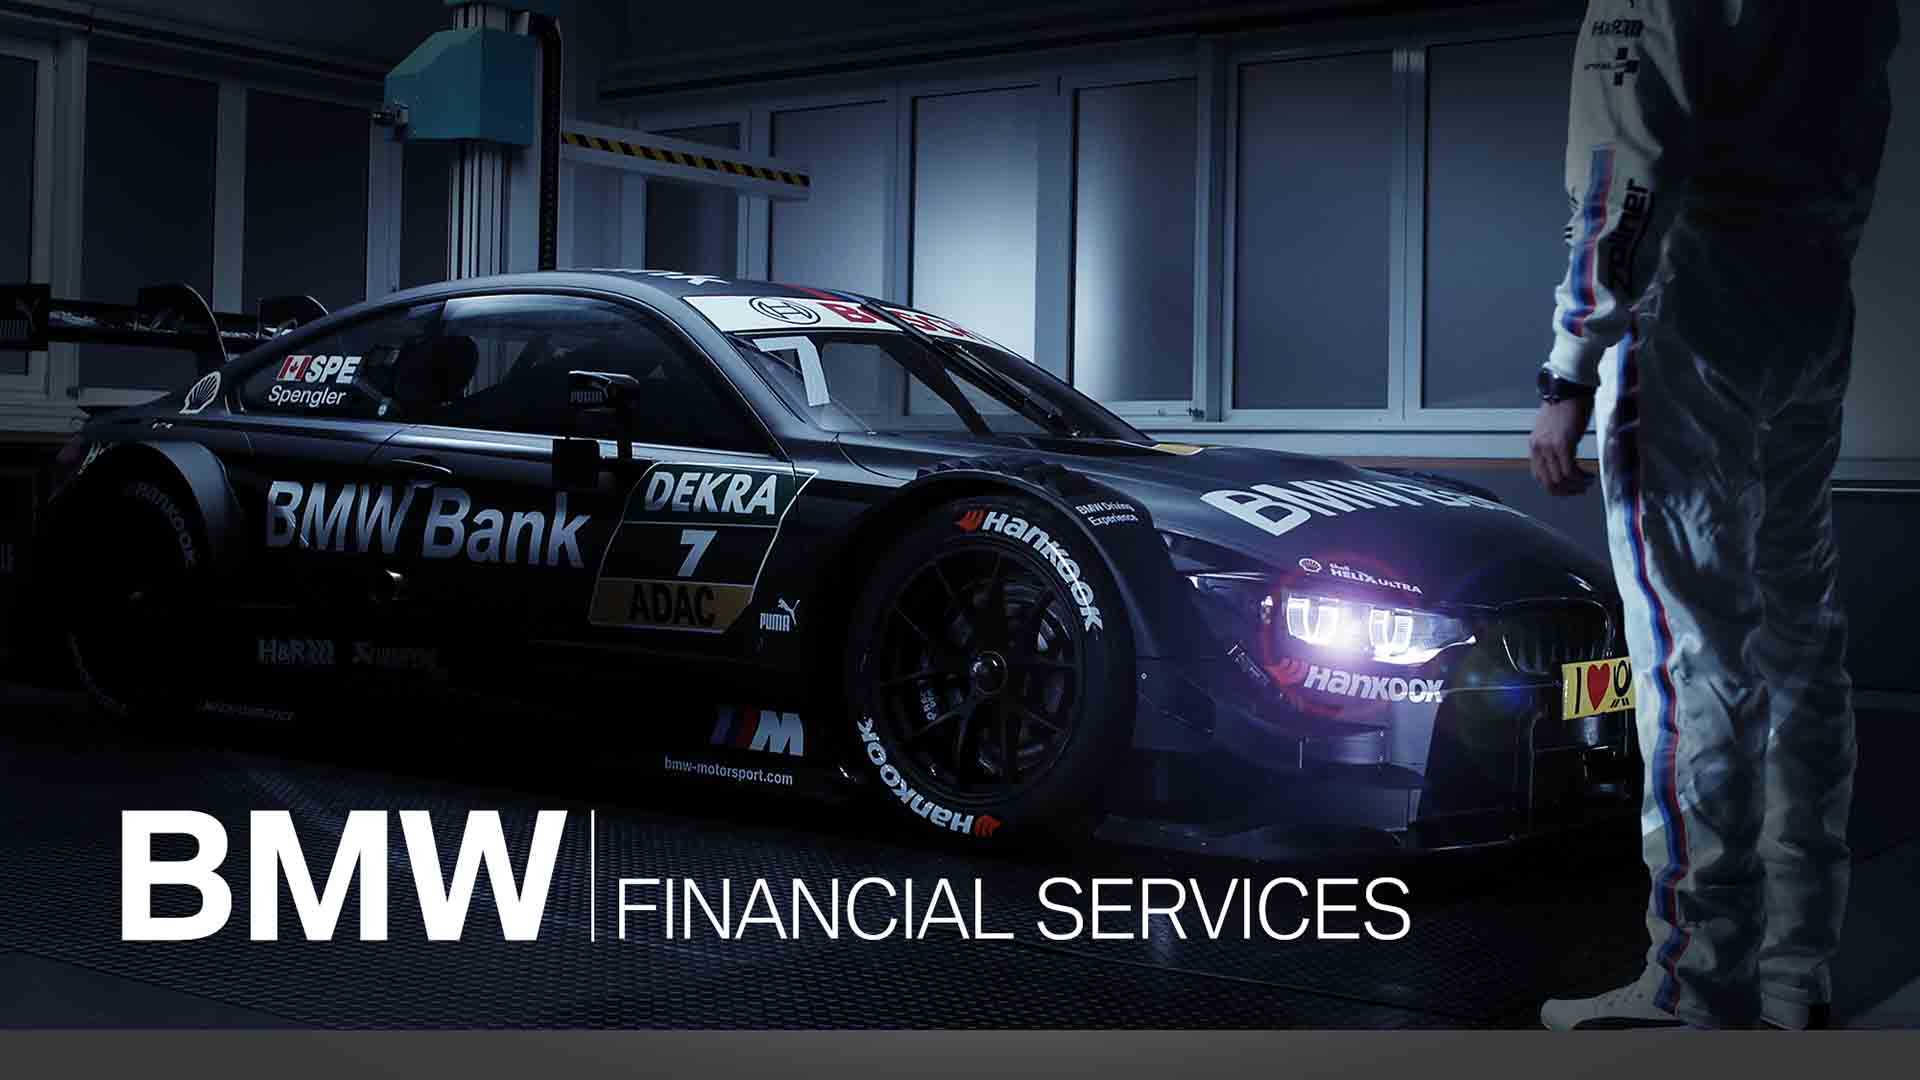 BMW Bank Financial Services – Bruno Spengler